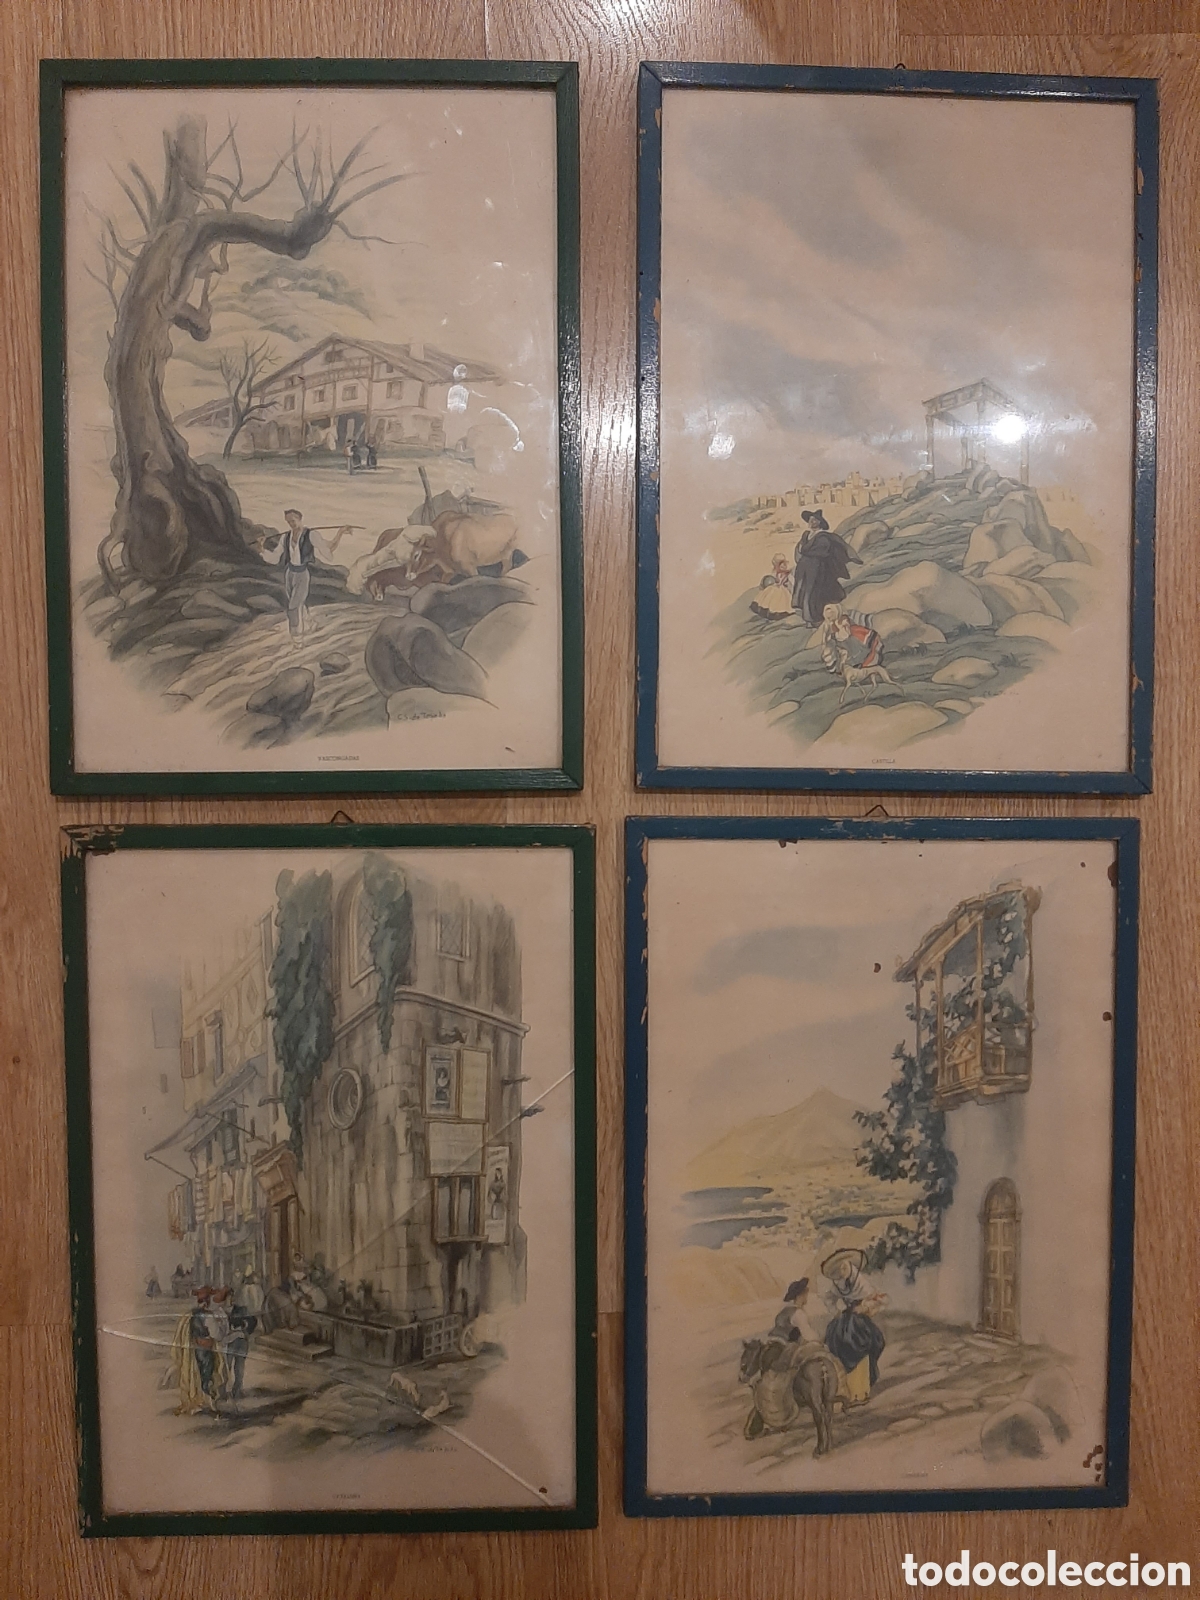 cuatro láminas enmarcadas de carlos saenz de te - Acquista Stampe